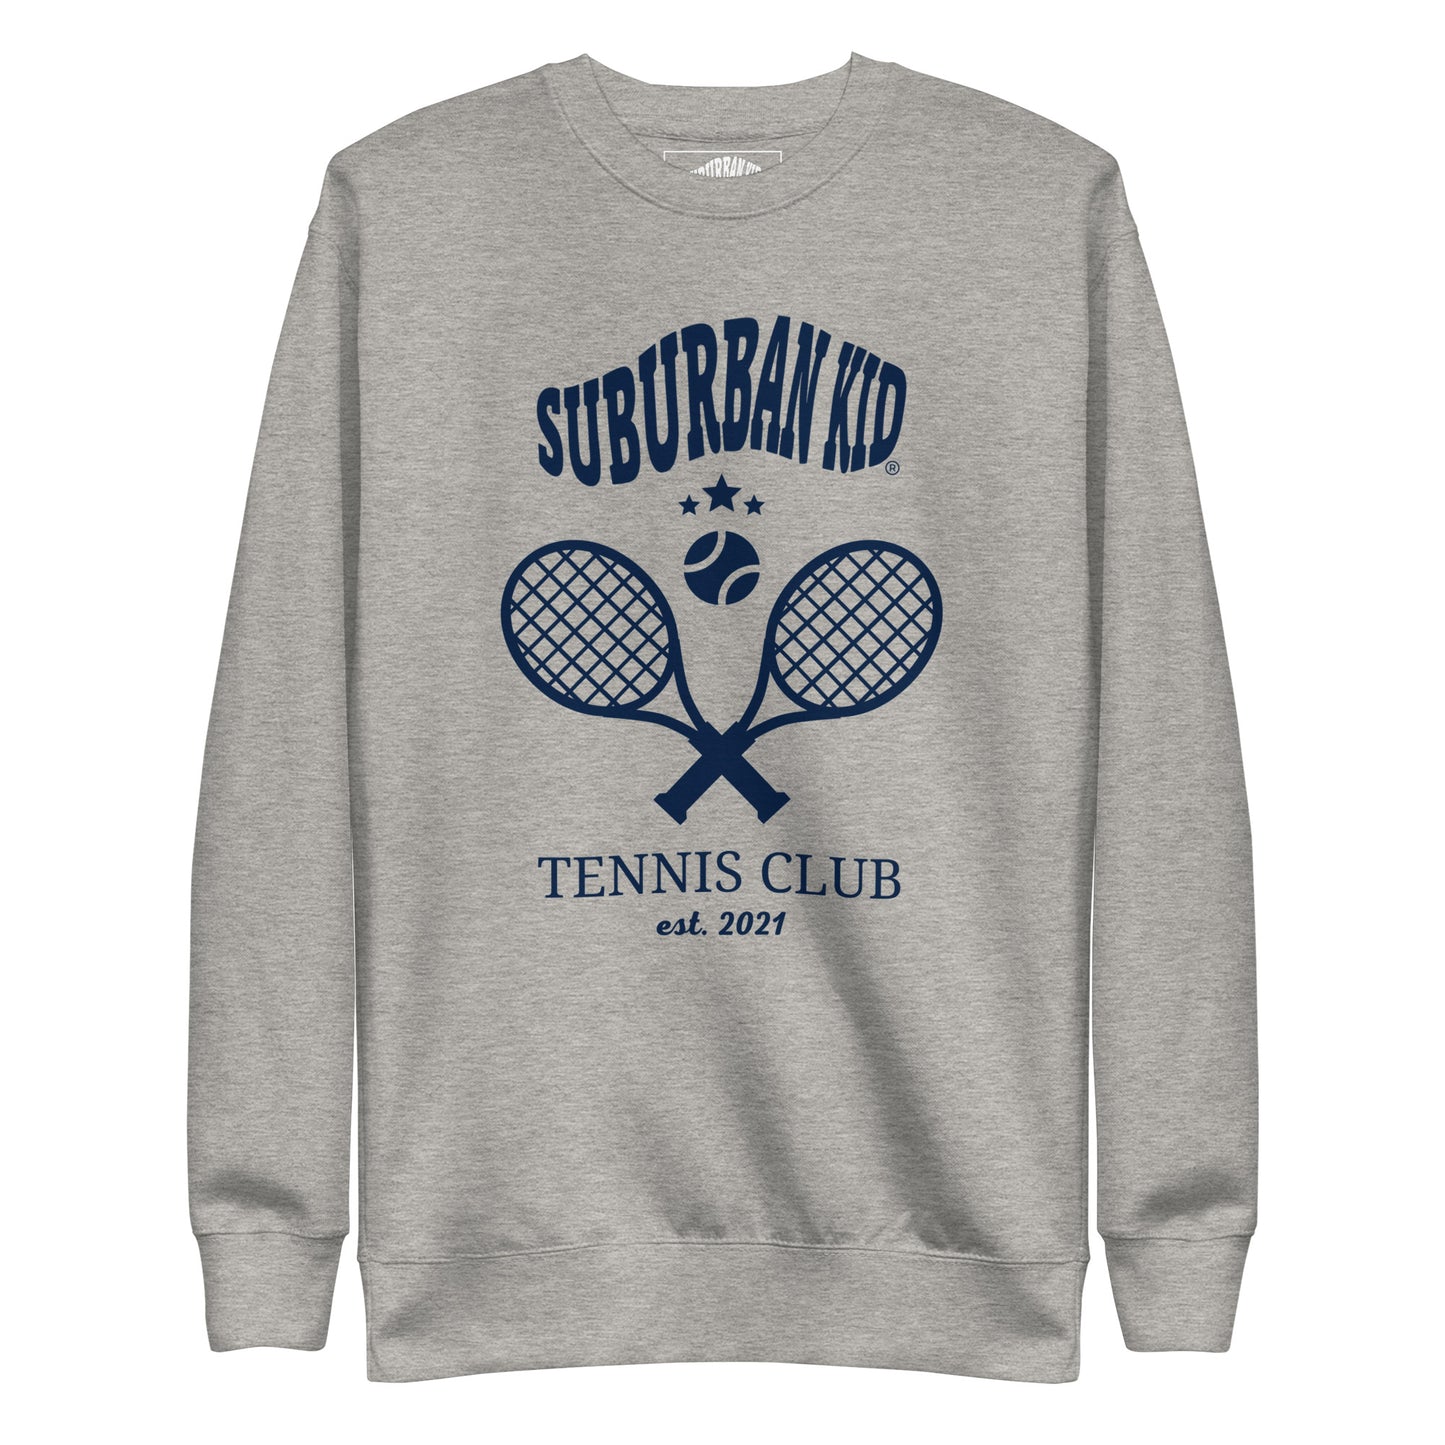 Suburban Kid Tennis Club Sweatshirt